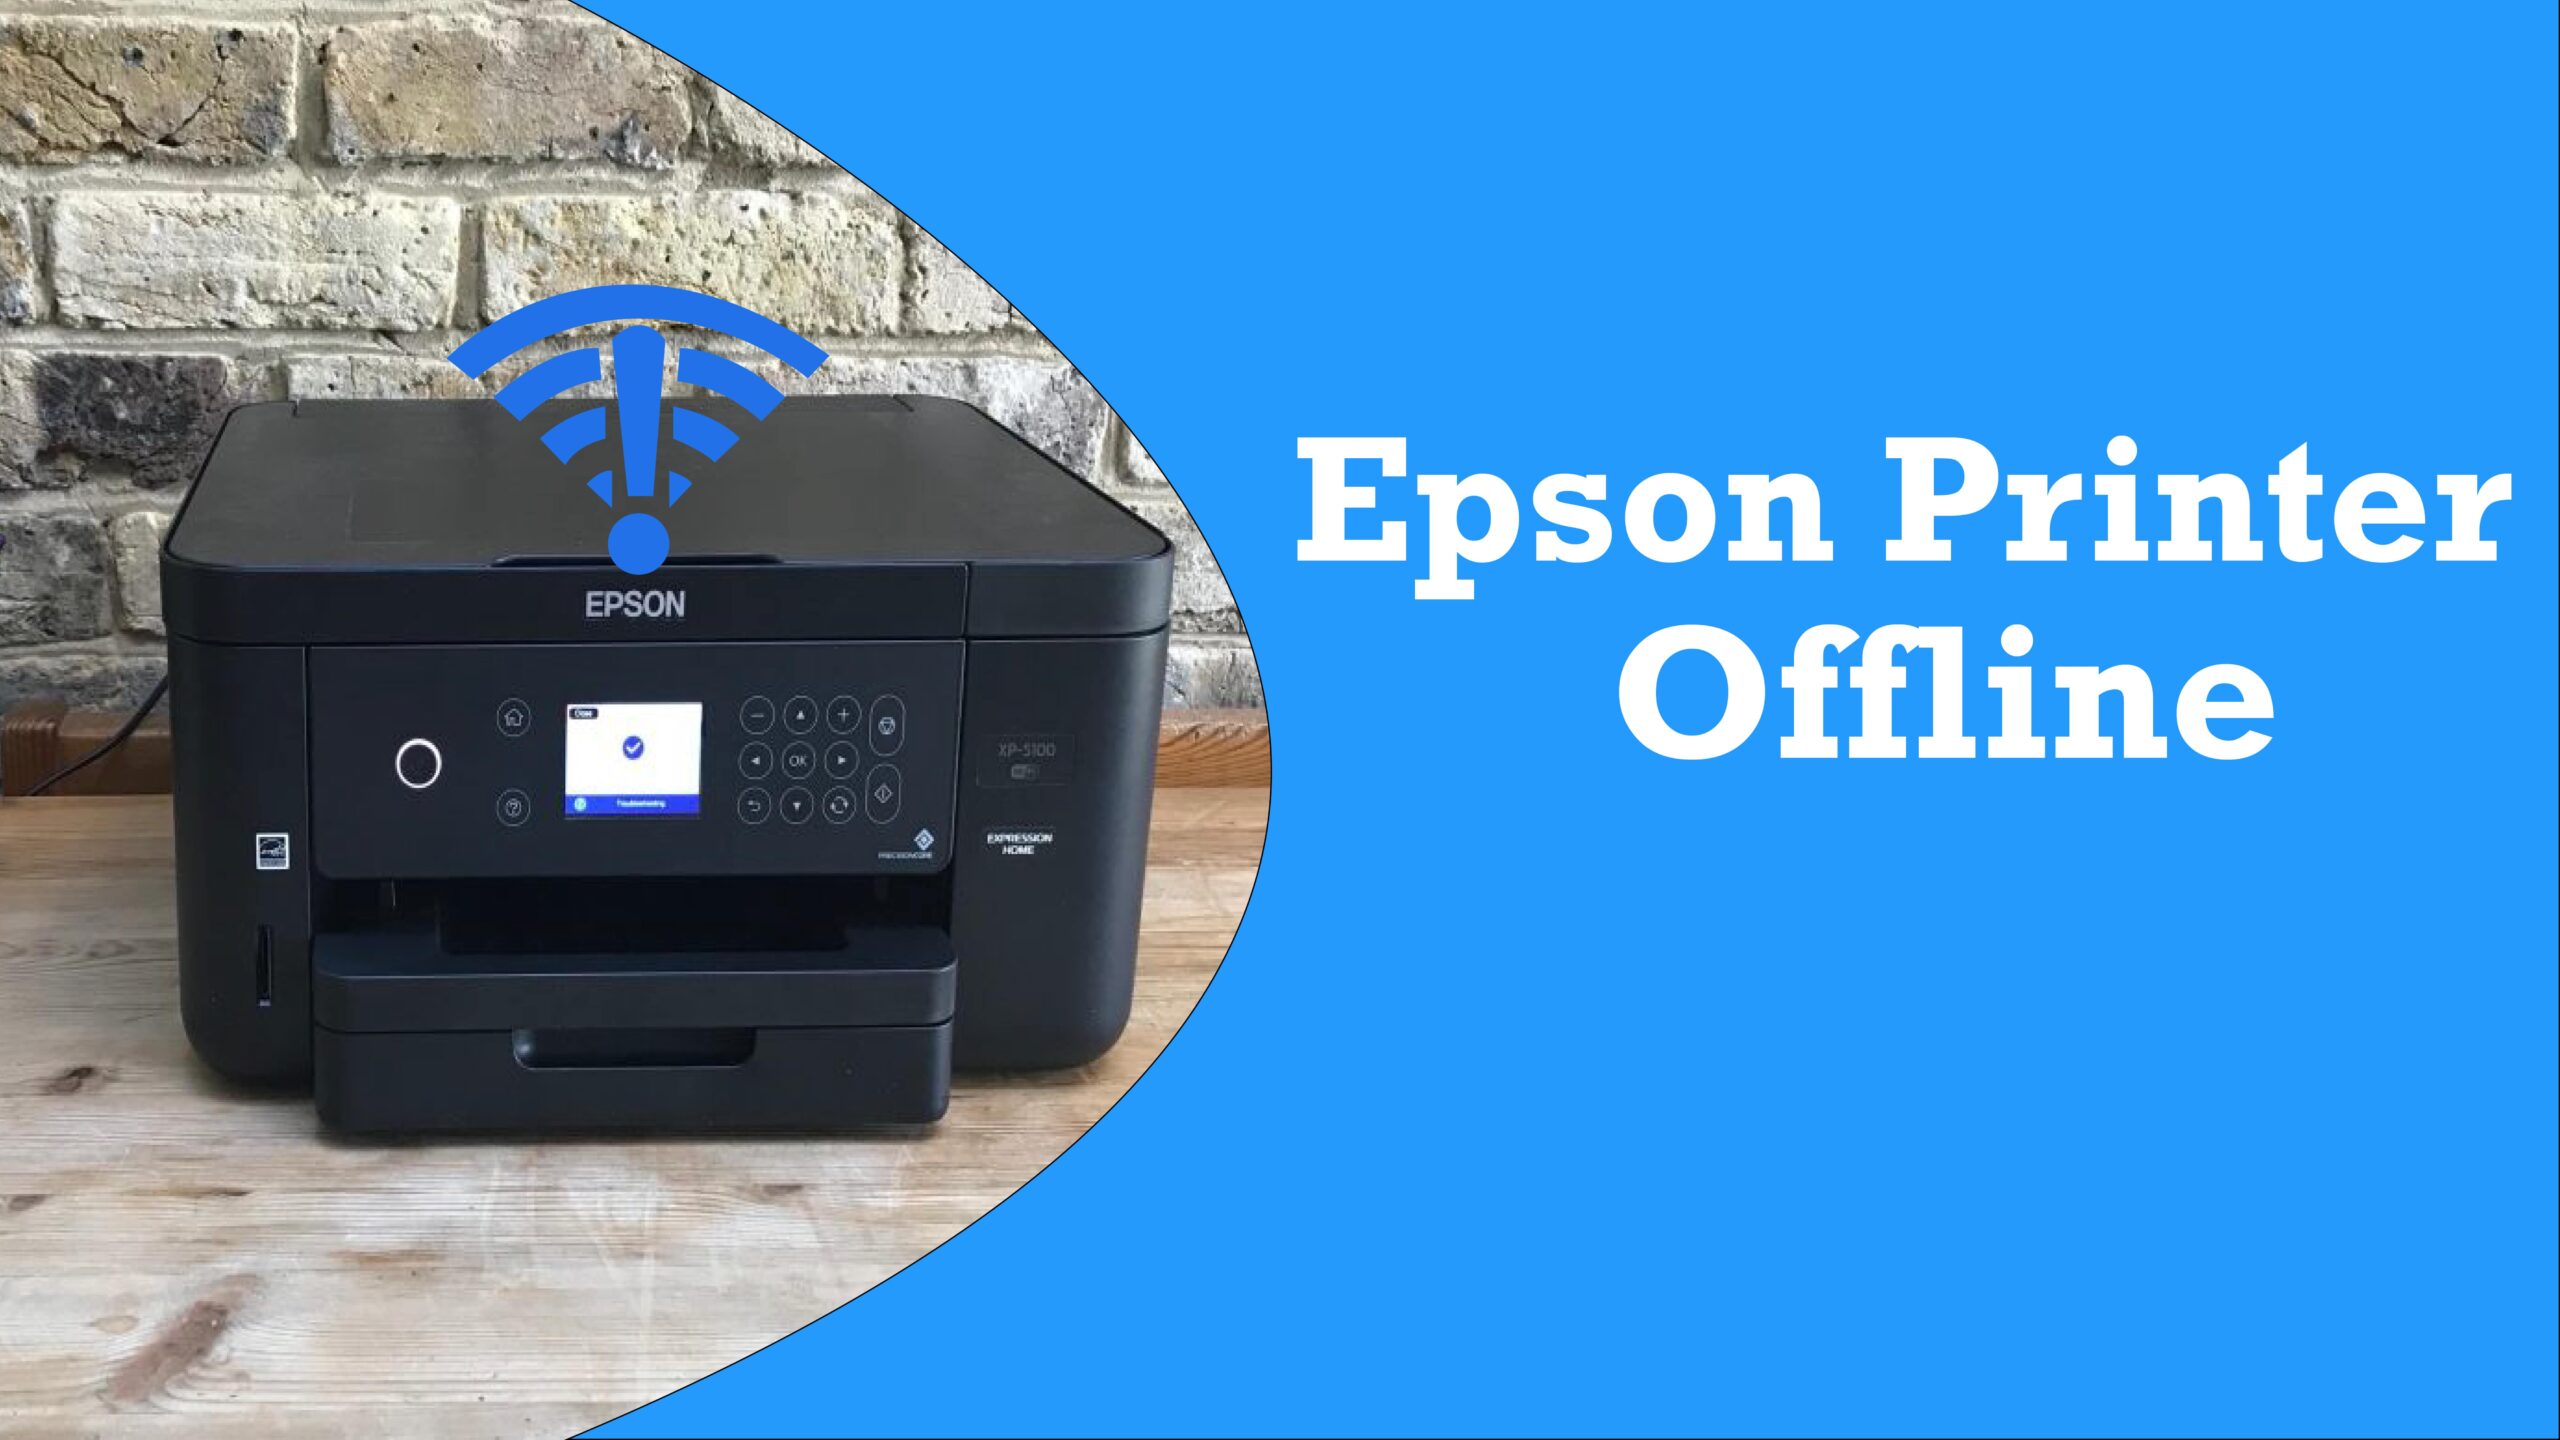 Epson Printer Is Offline